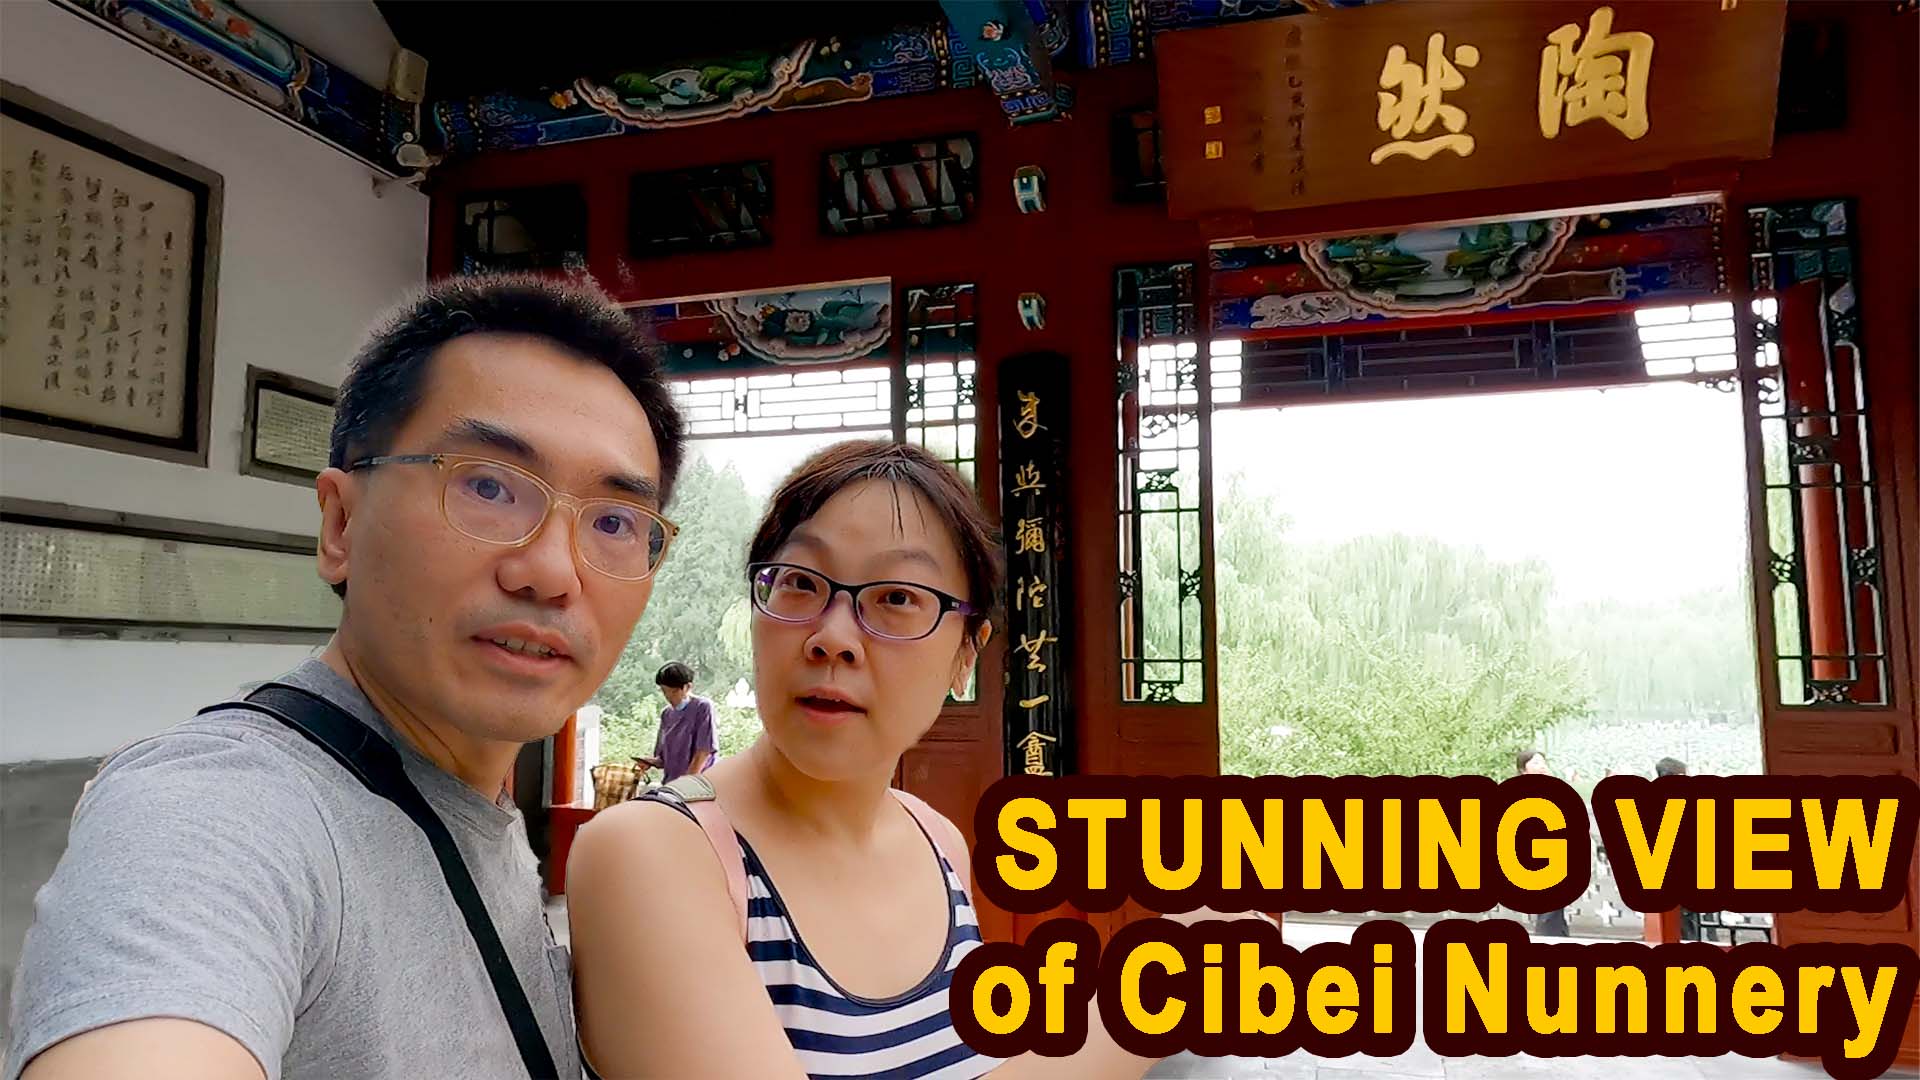 Cibei Nunnery - The STUNNING view in Taoranting Park in Beijing Part 2